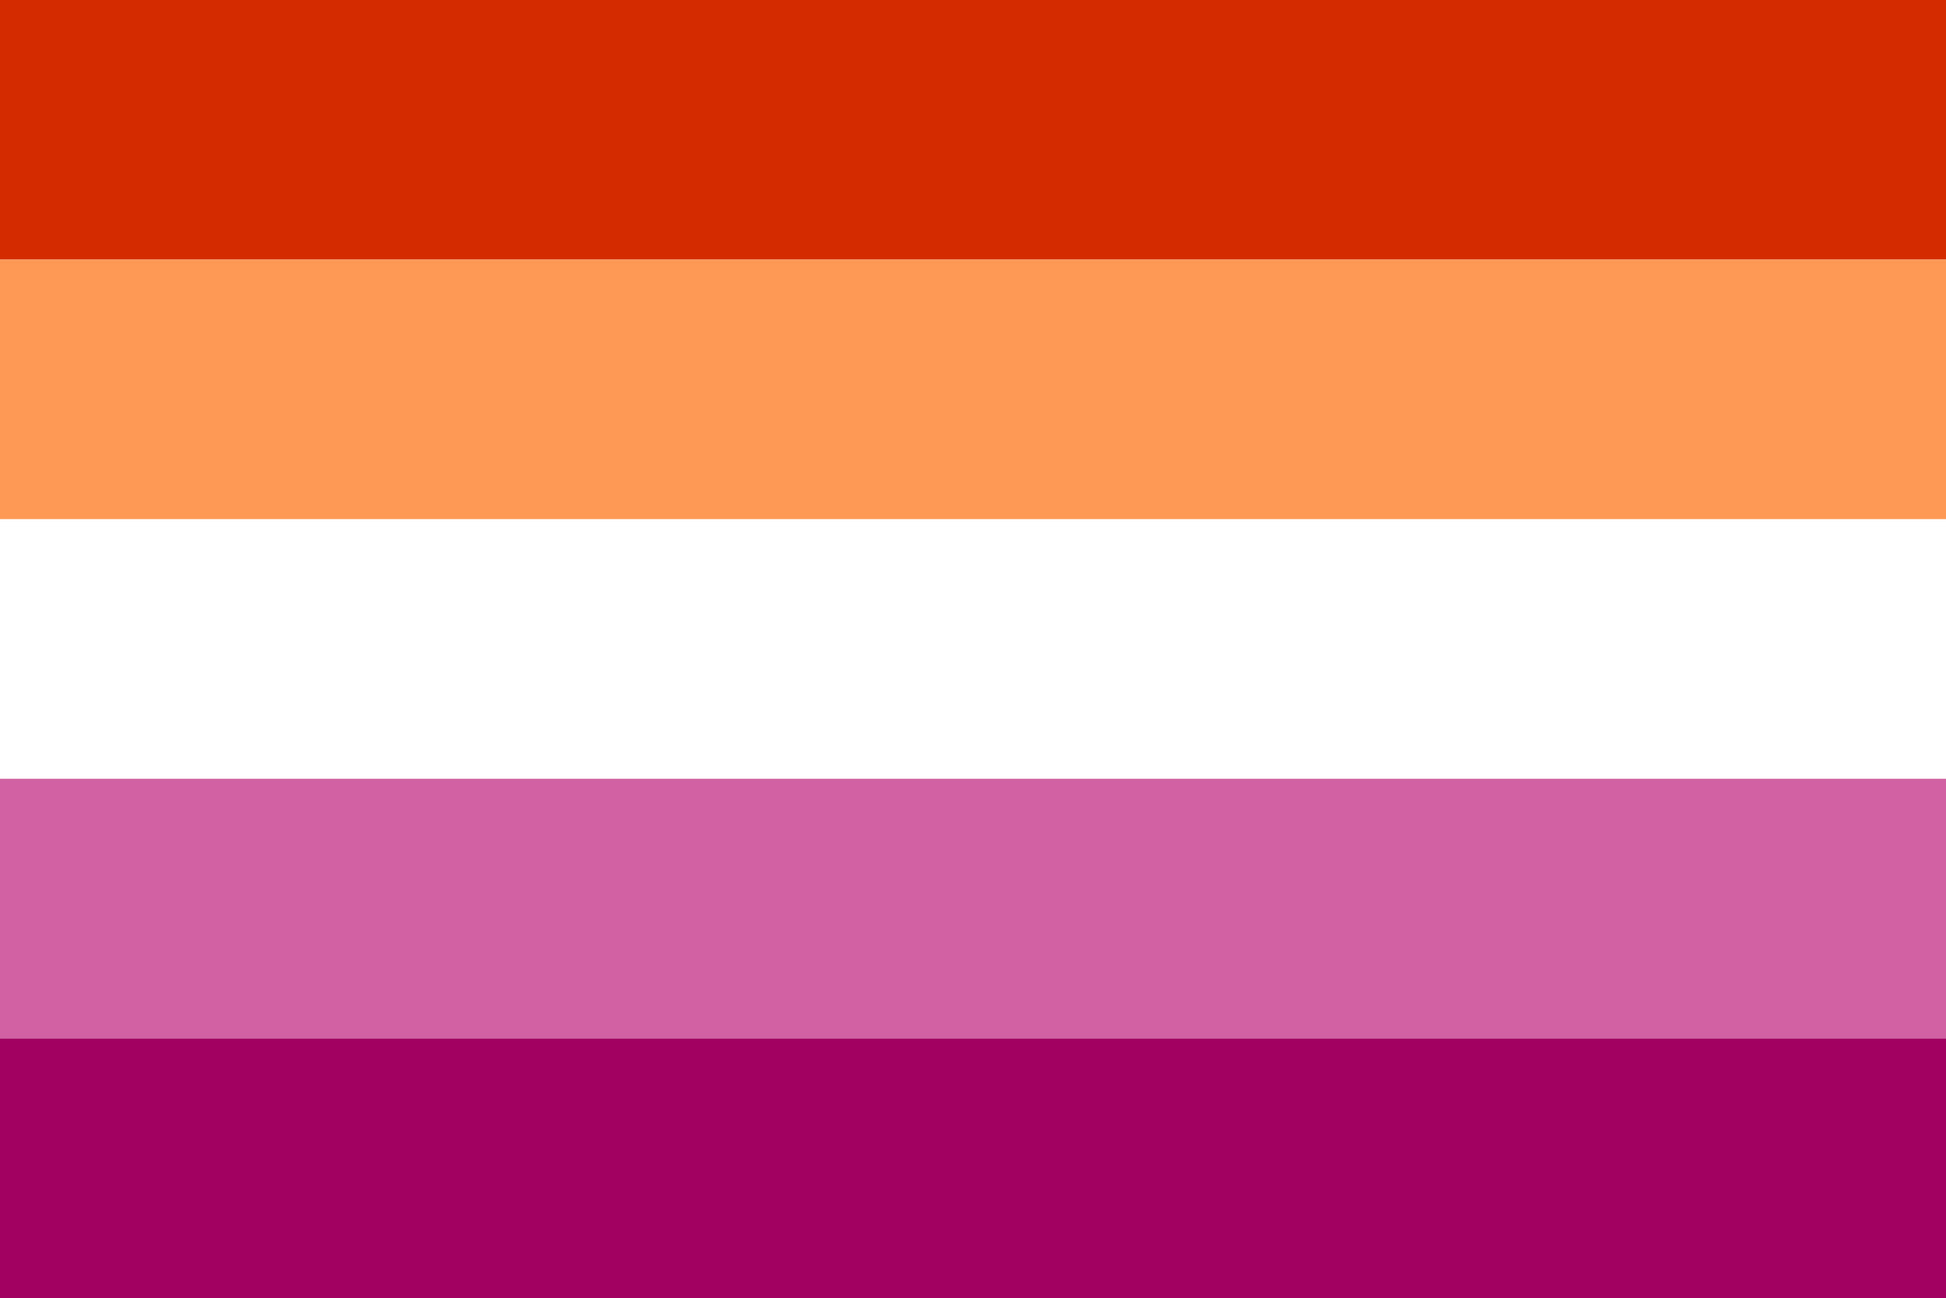 Lesbian Sunset Pride Flag